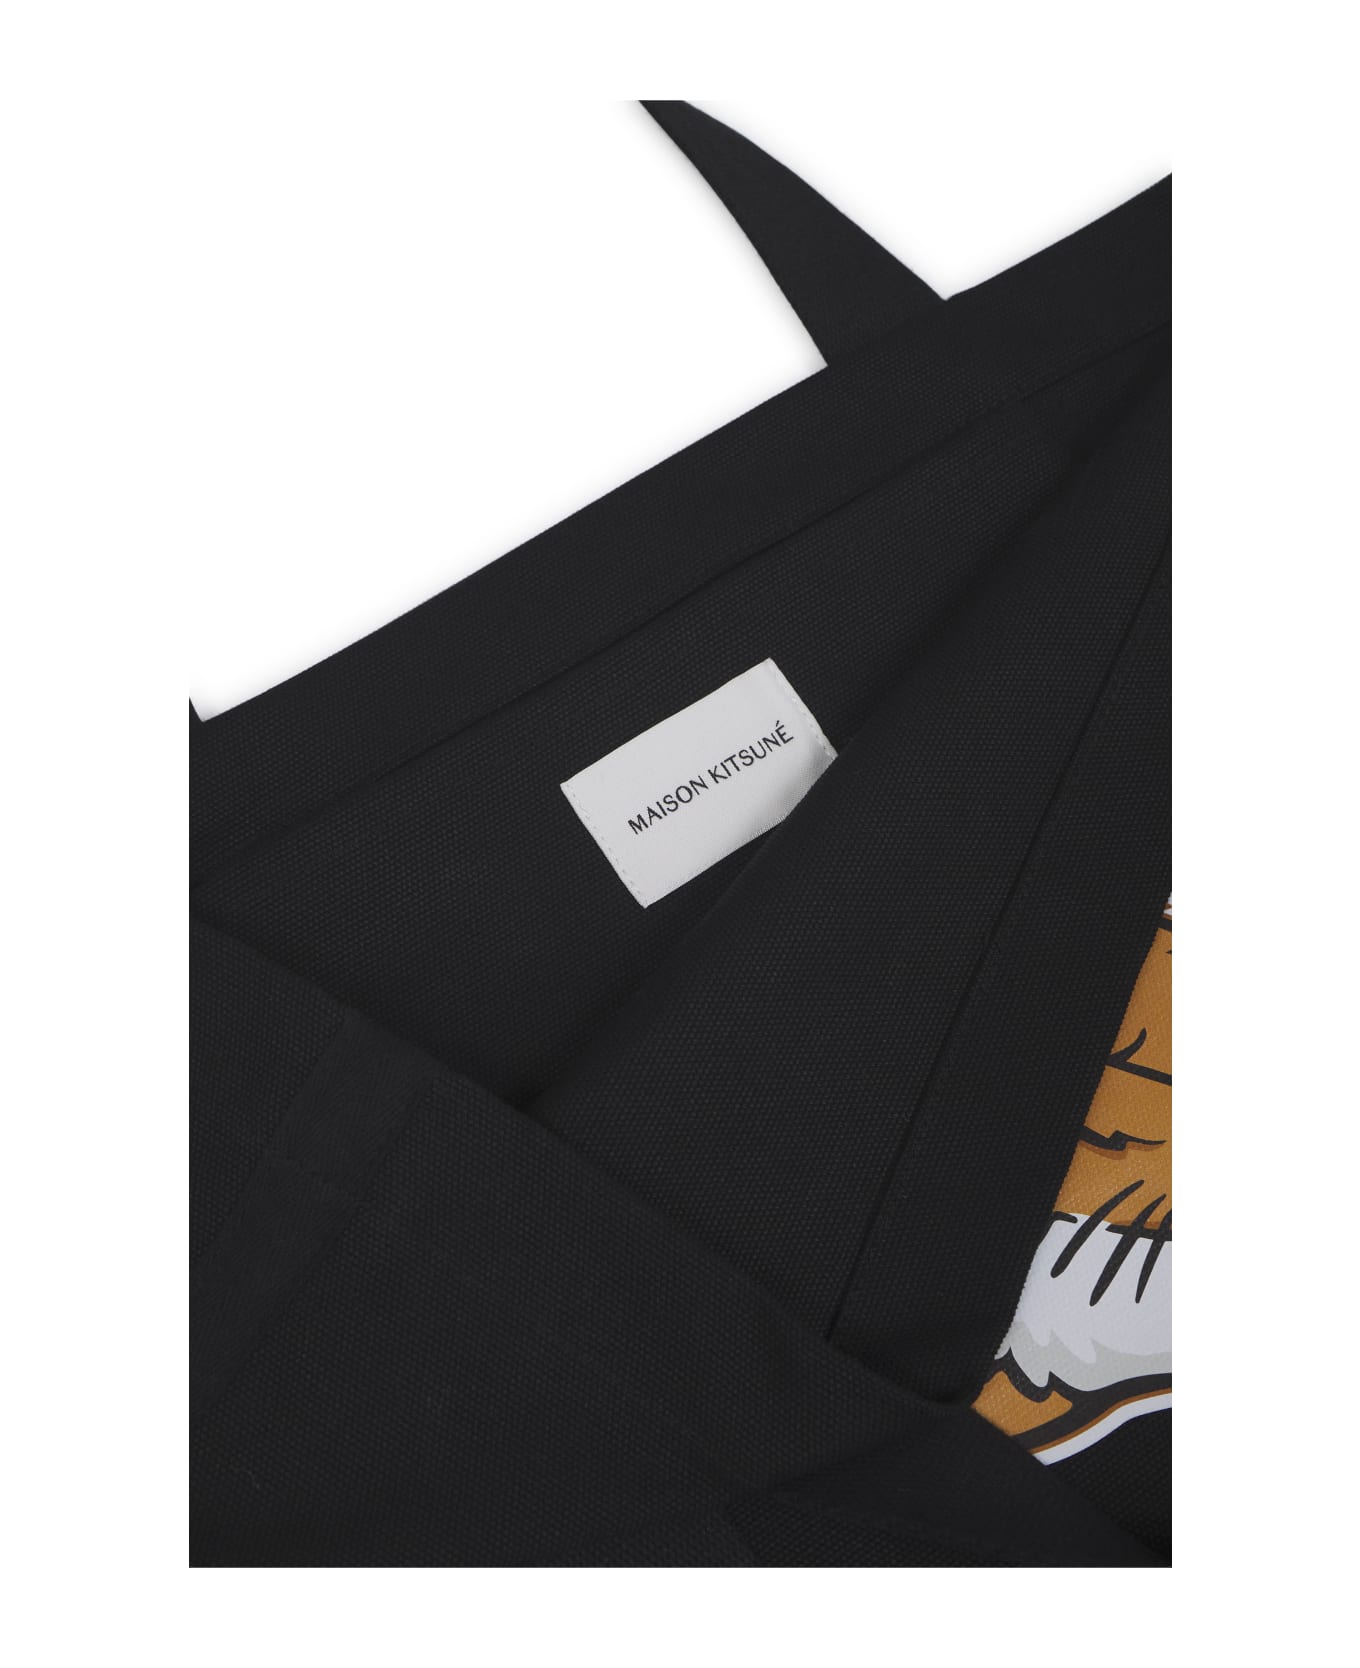 Maison Kitsuné Fox Head Tote Bag - Black トートバッグ